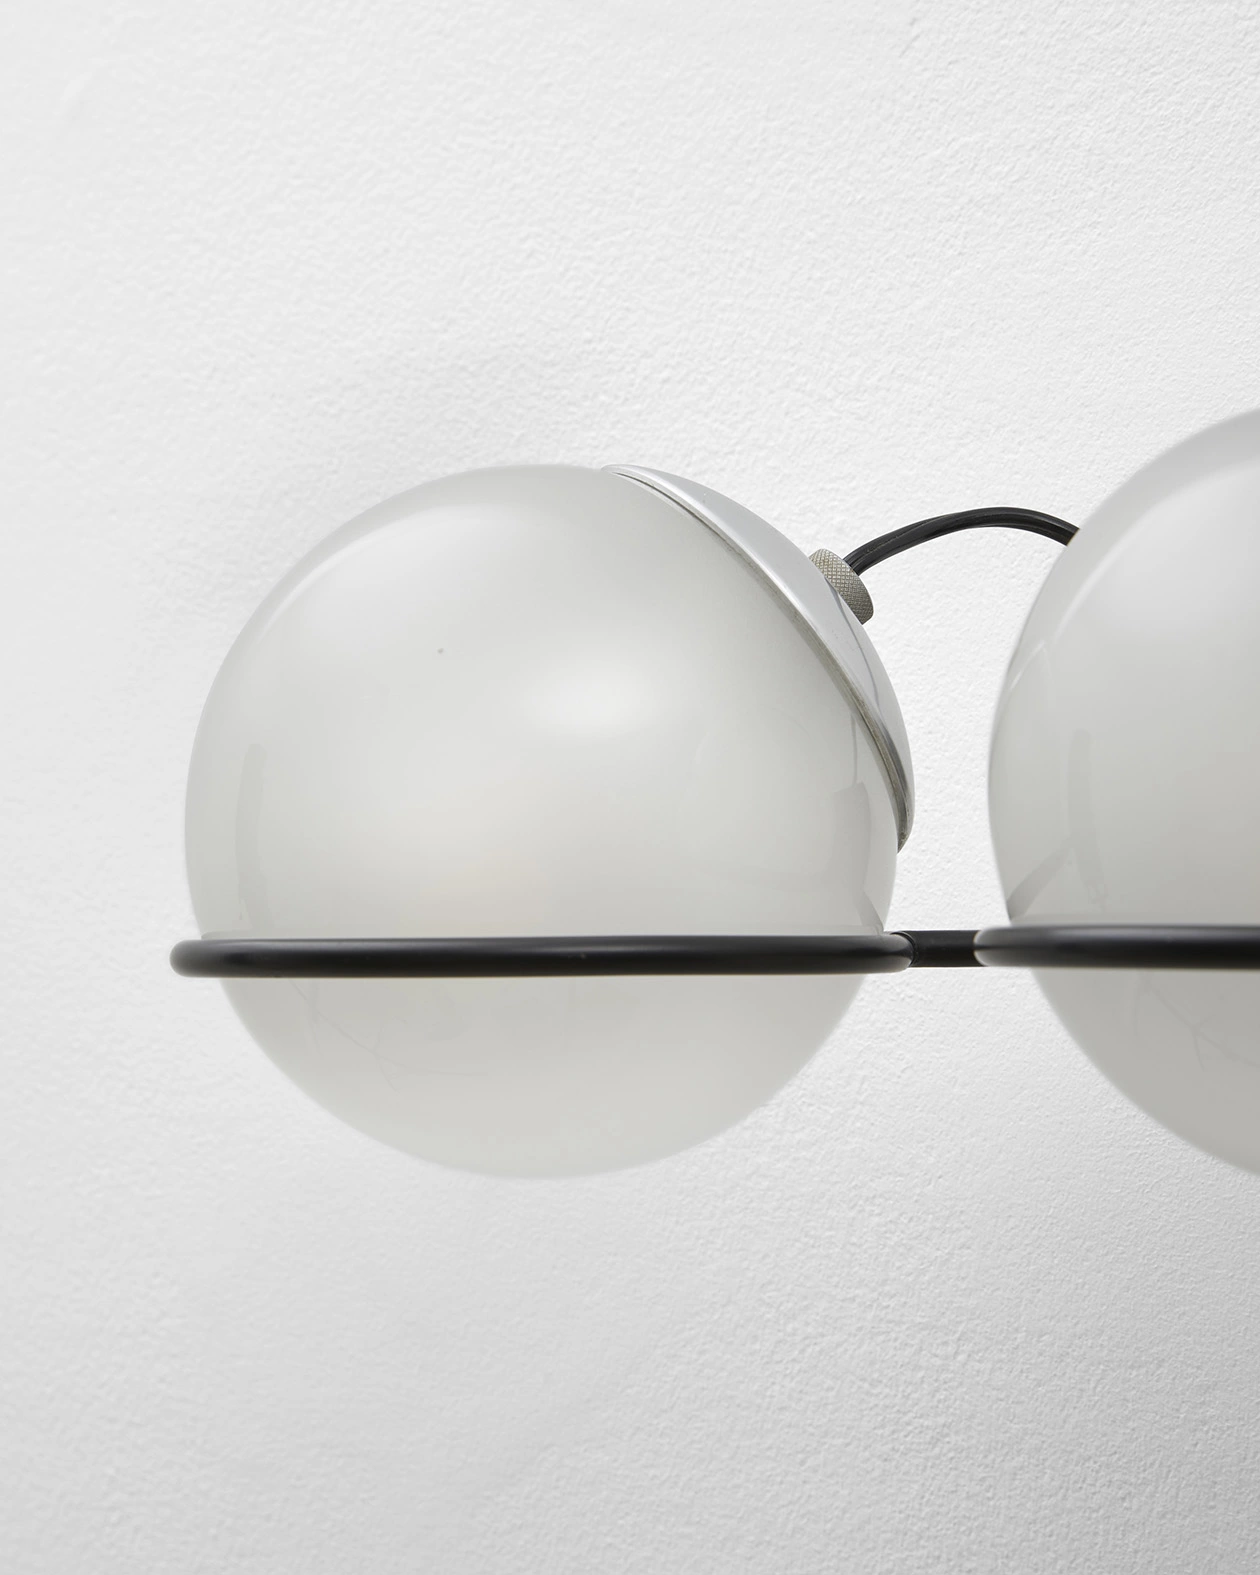 237/3 - Gino Sarfatti - Wall light - Galerie kreo